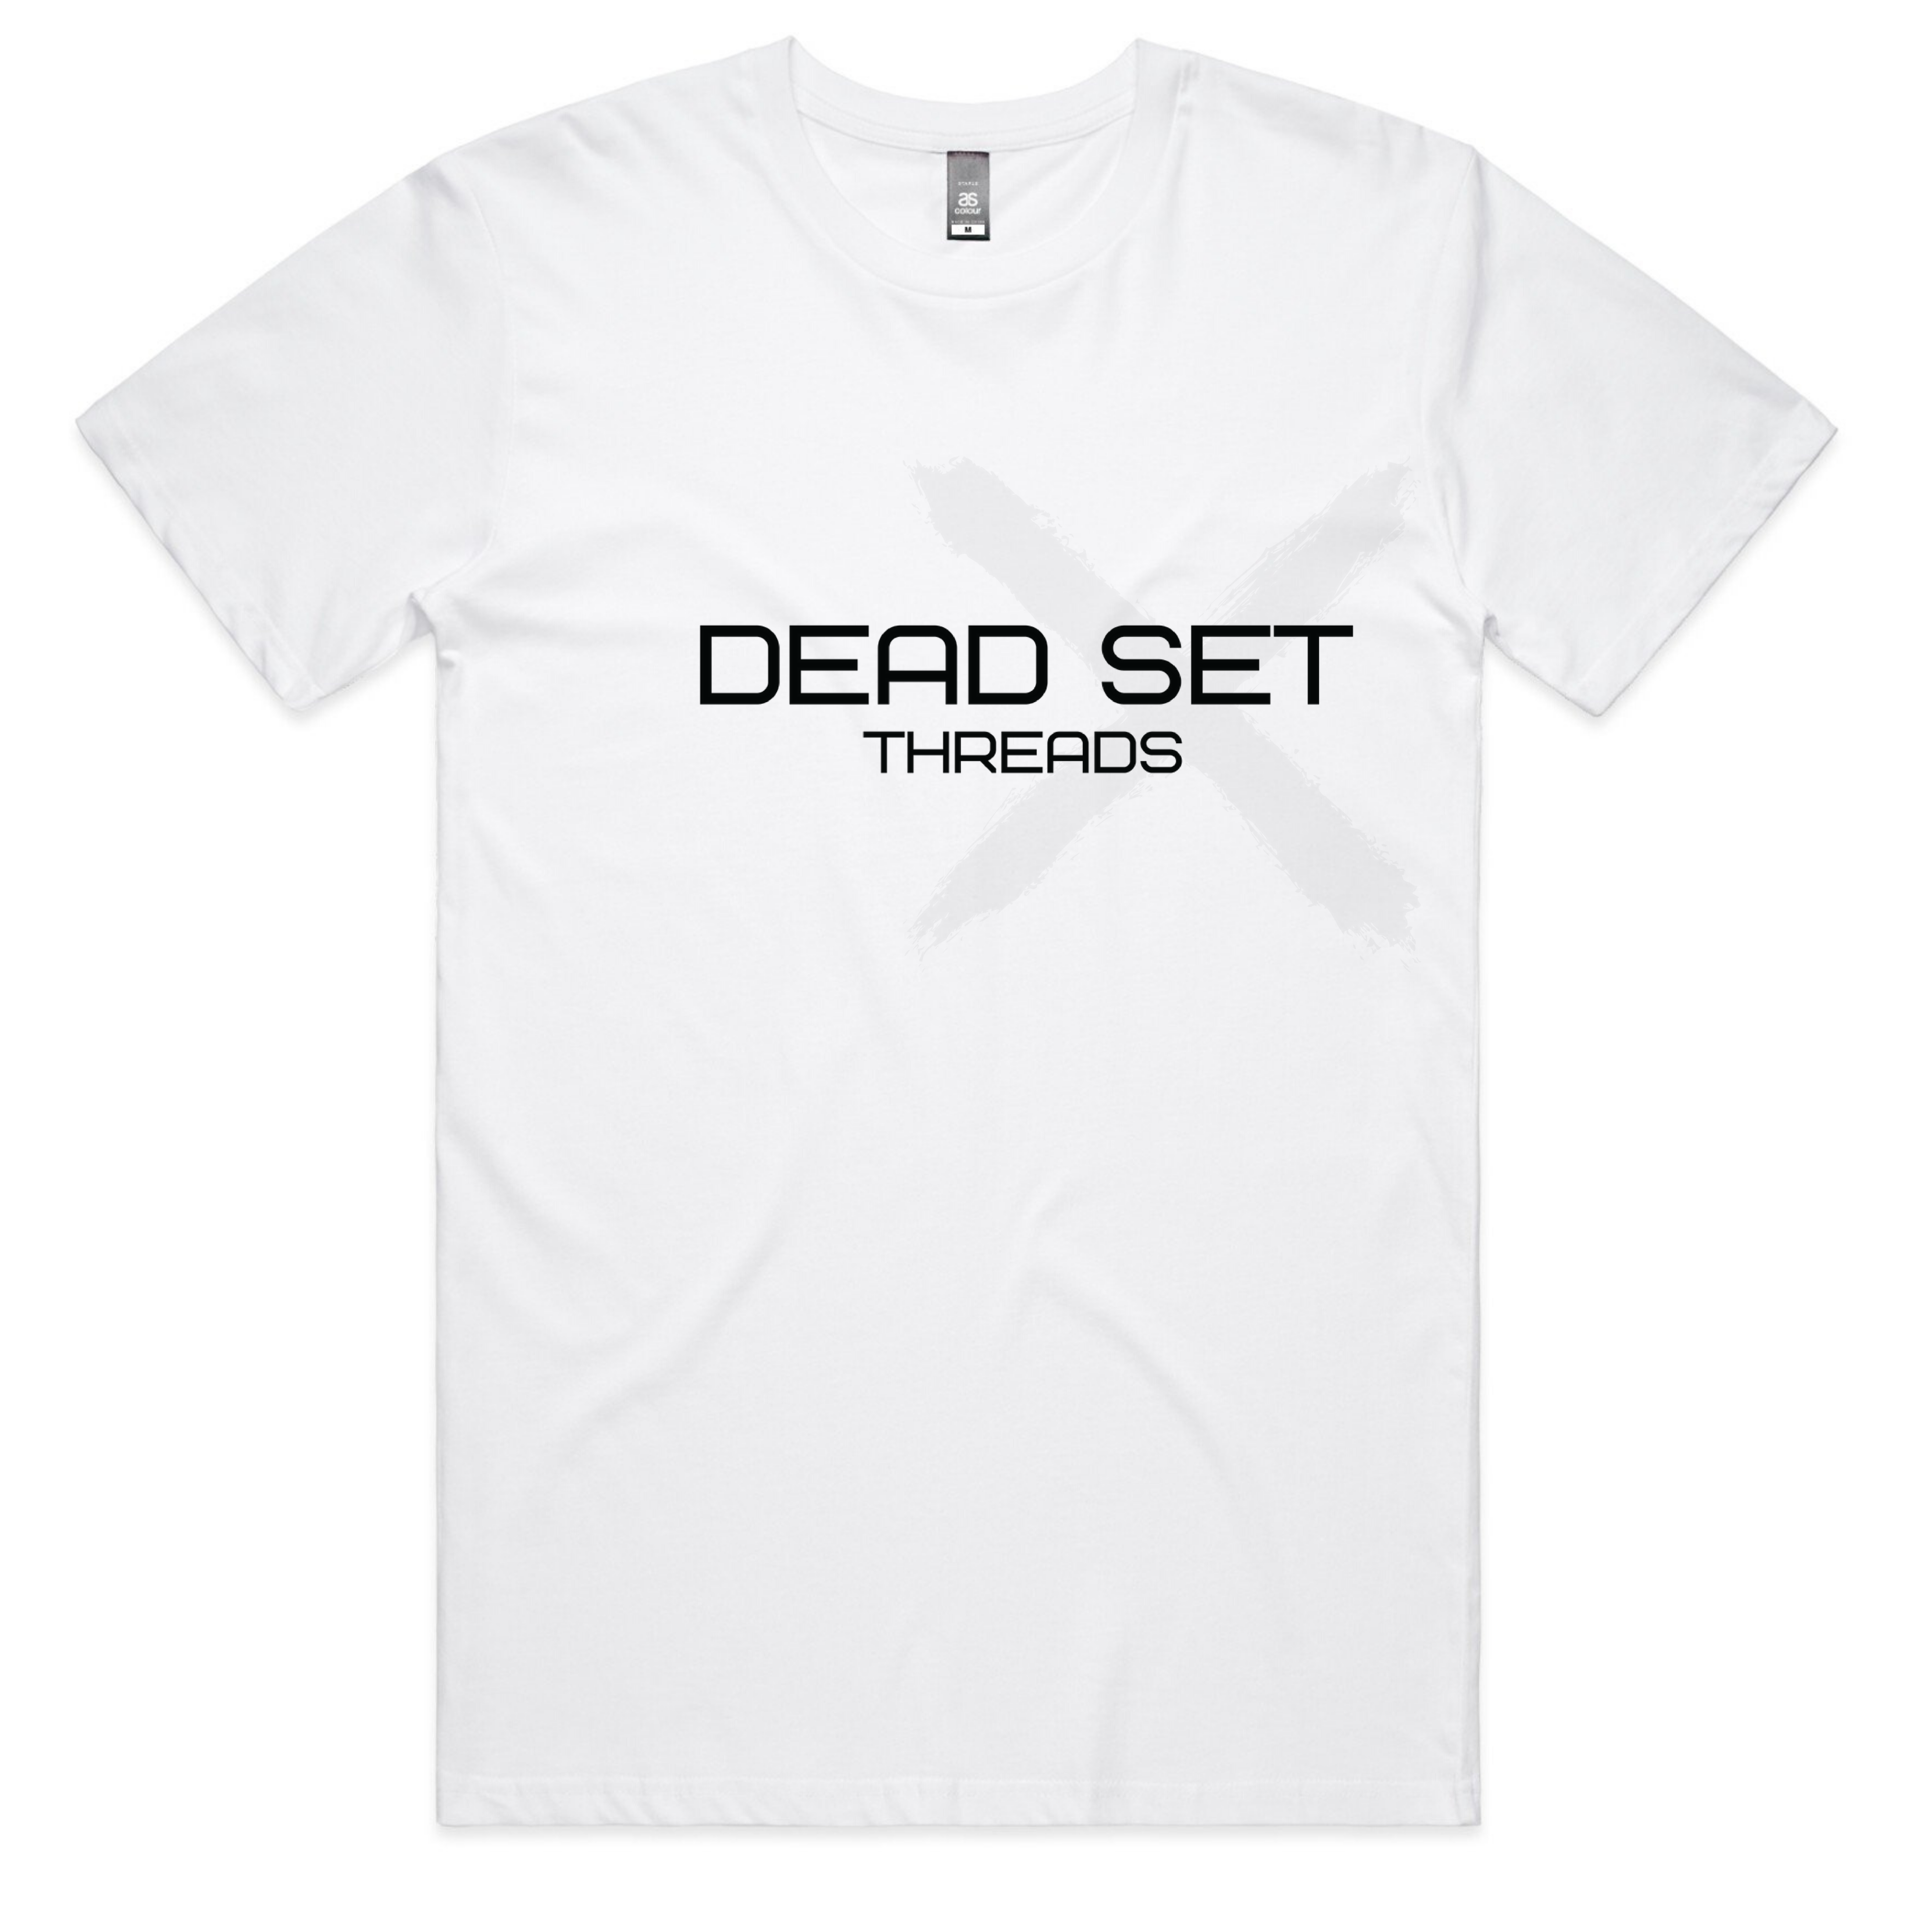 Men's Custom Printed T-Shirt - Dead Set Threads